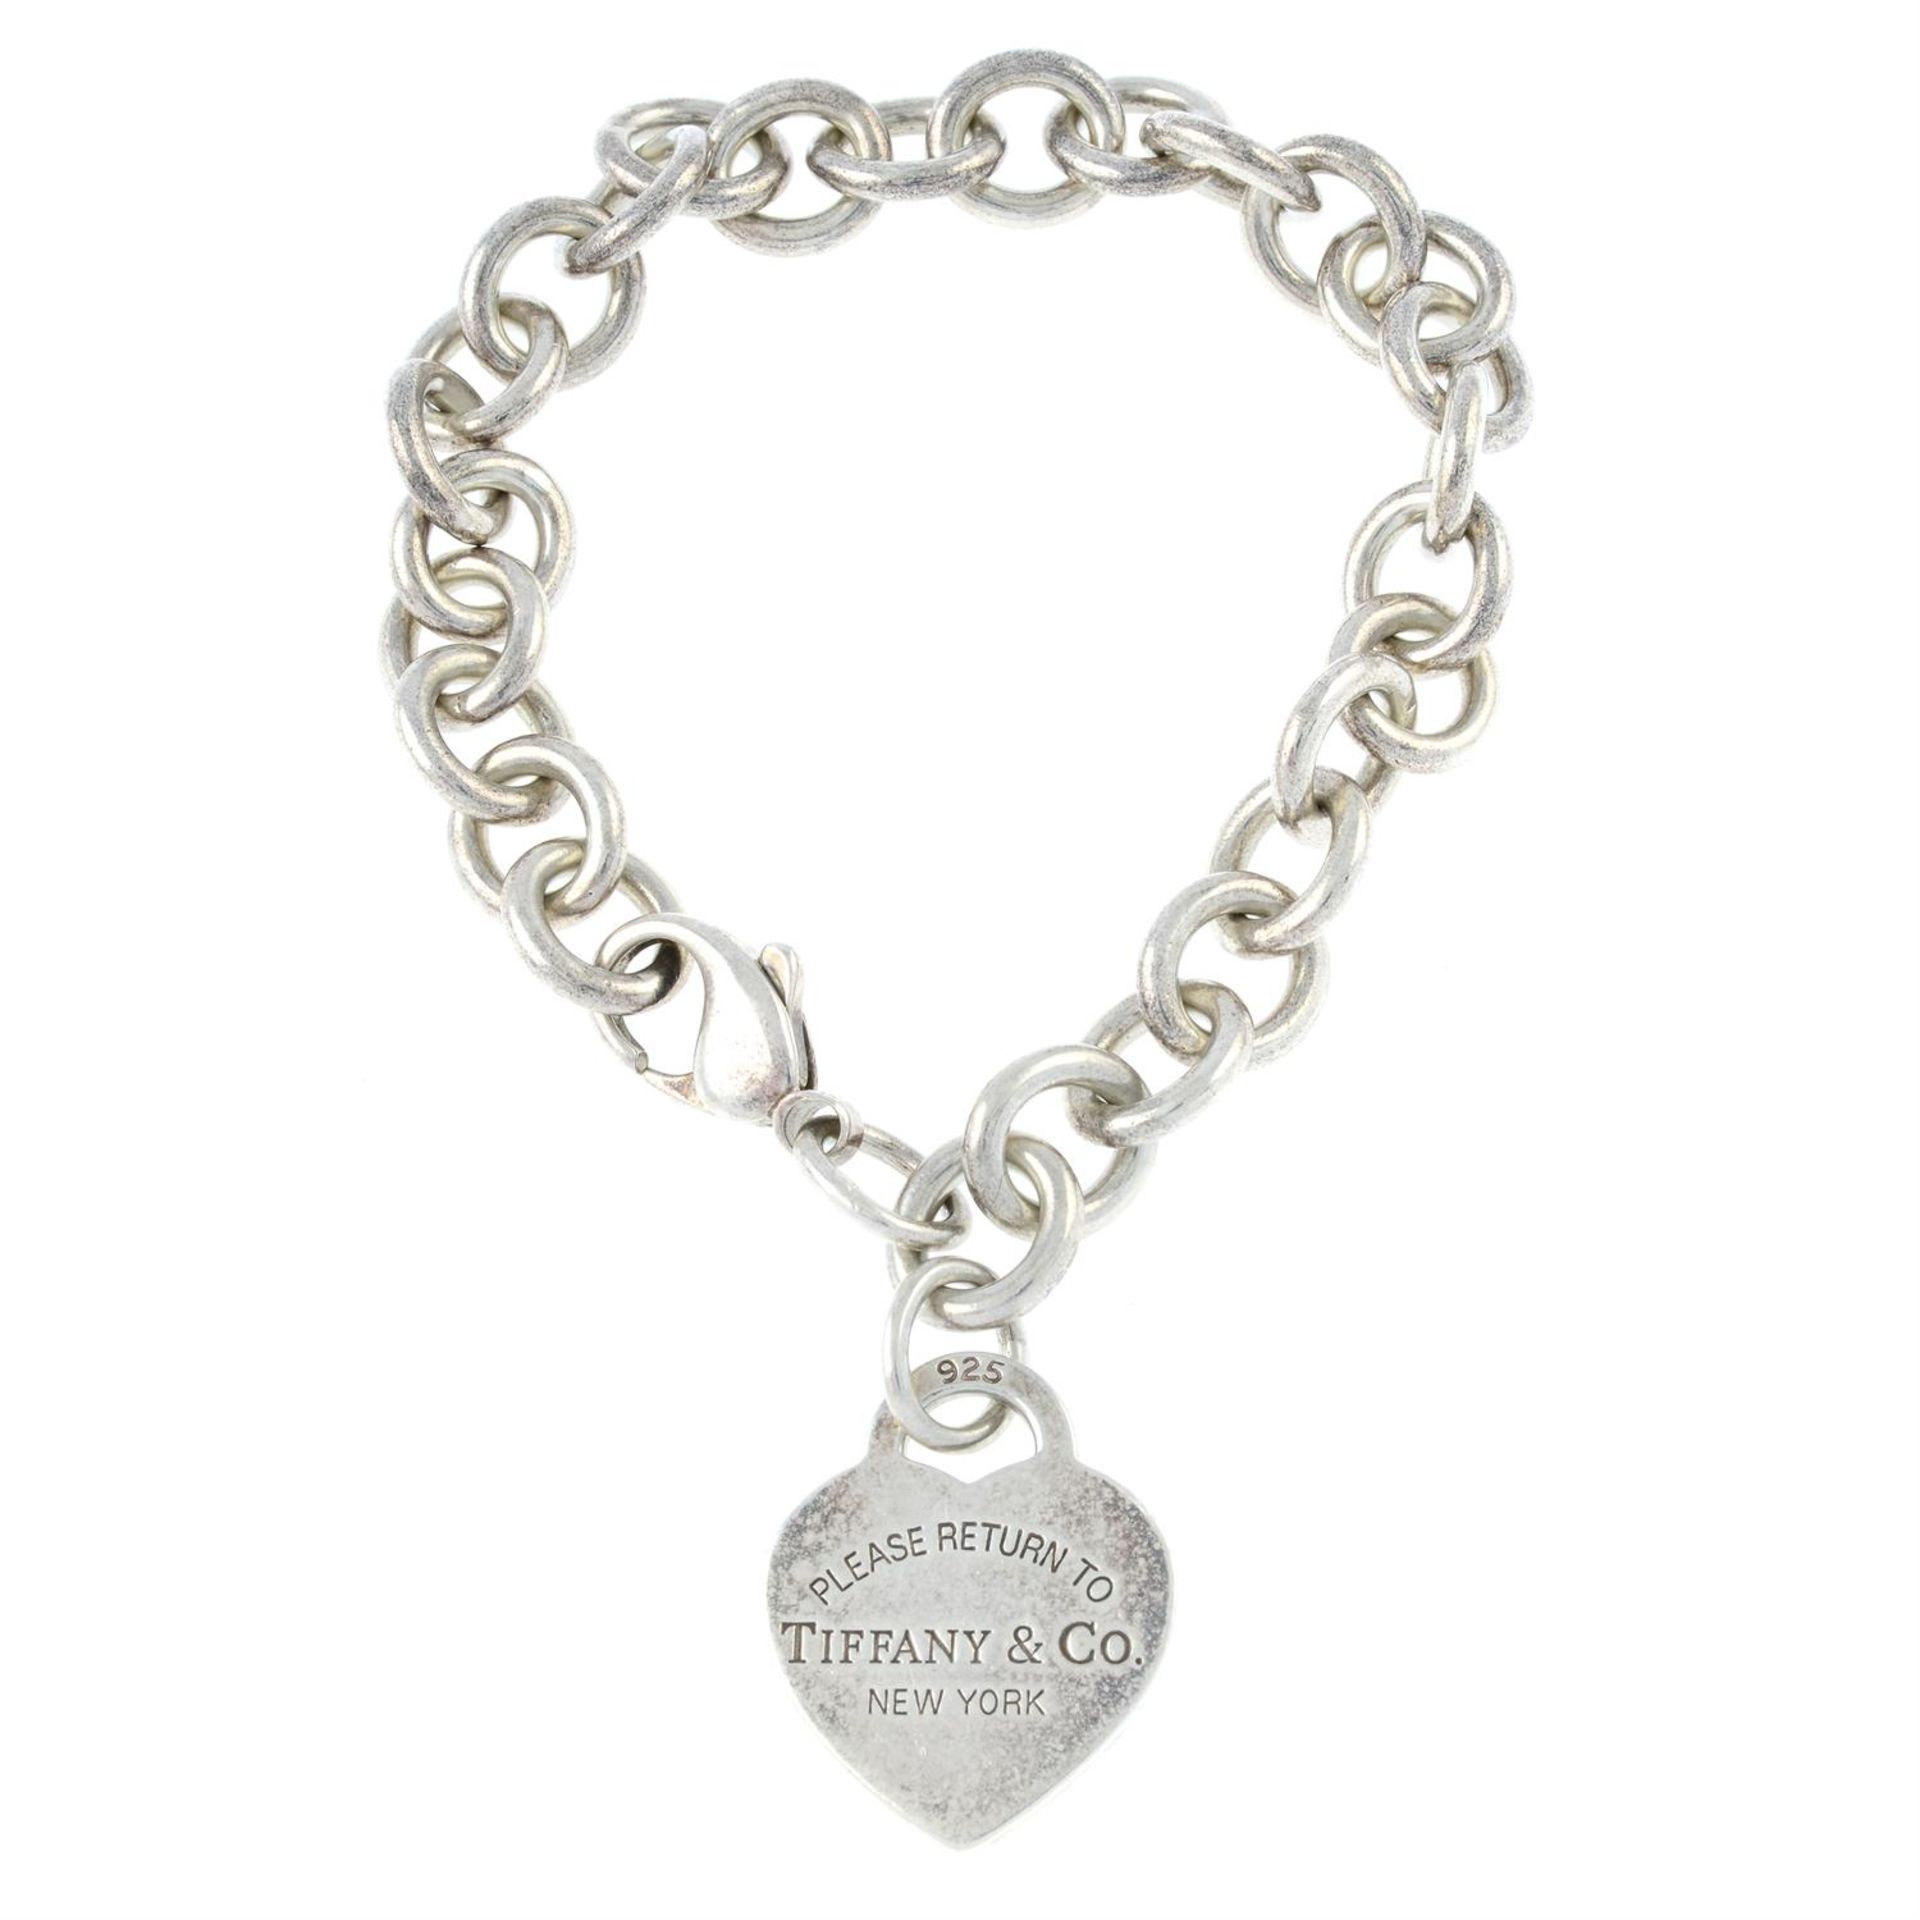 A silver 'Return to Tiffany' heart-shape tag bracelet, by Tiffany & Co.